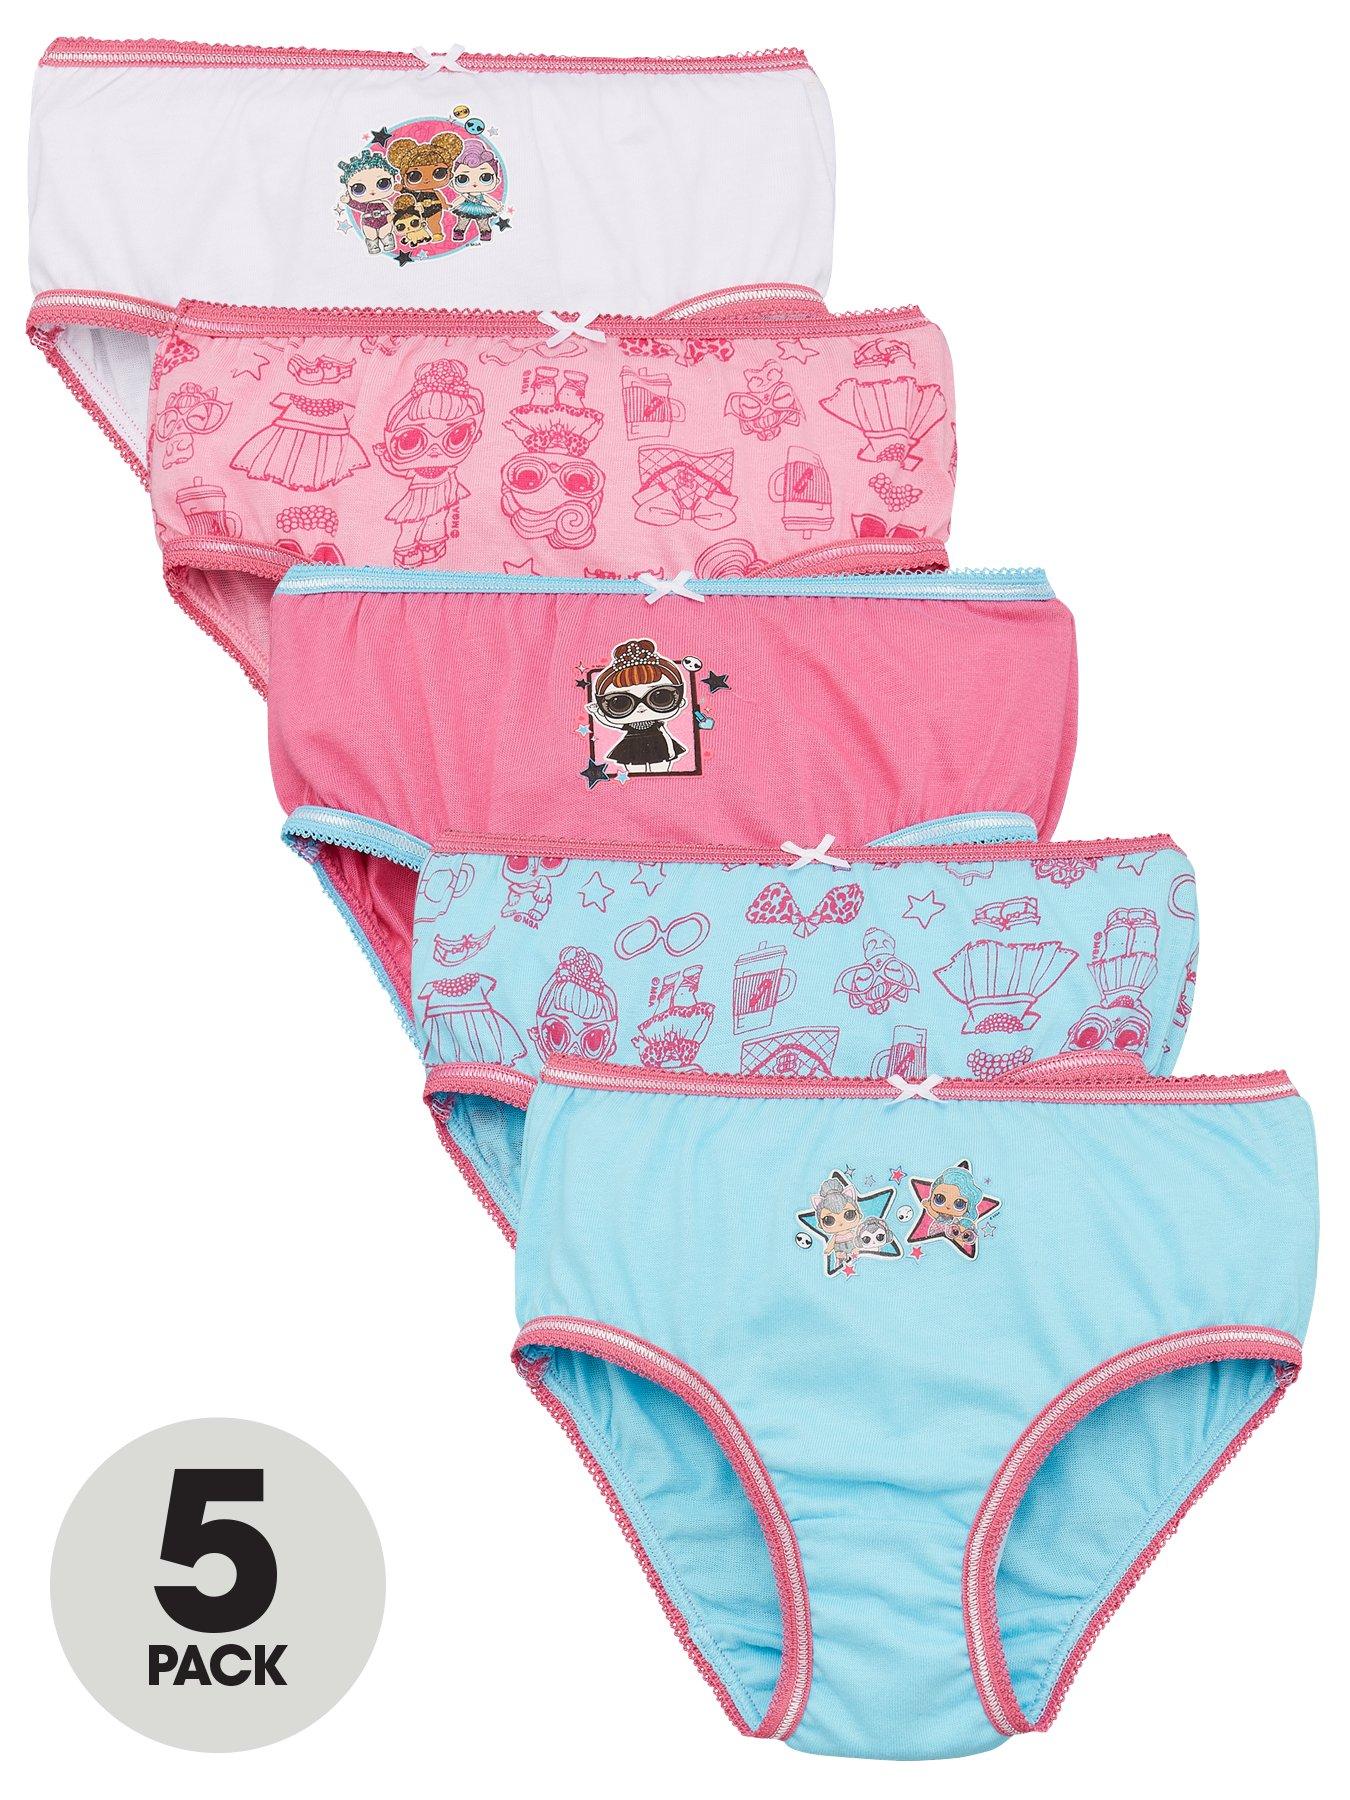 3 Pack Girls Vests Disney Frozen Infants Underwear Size 2-8 Years